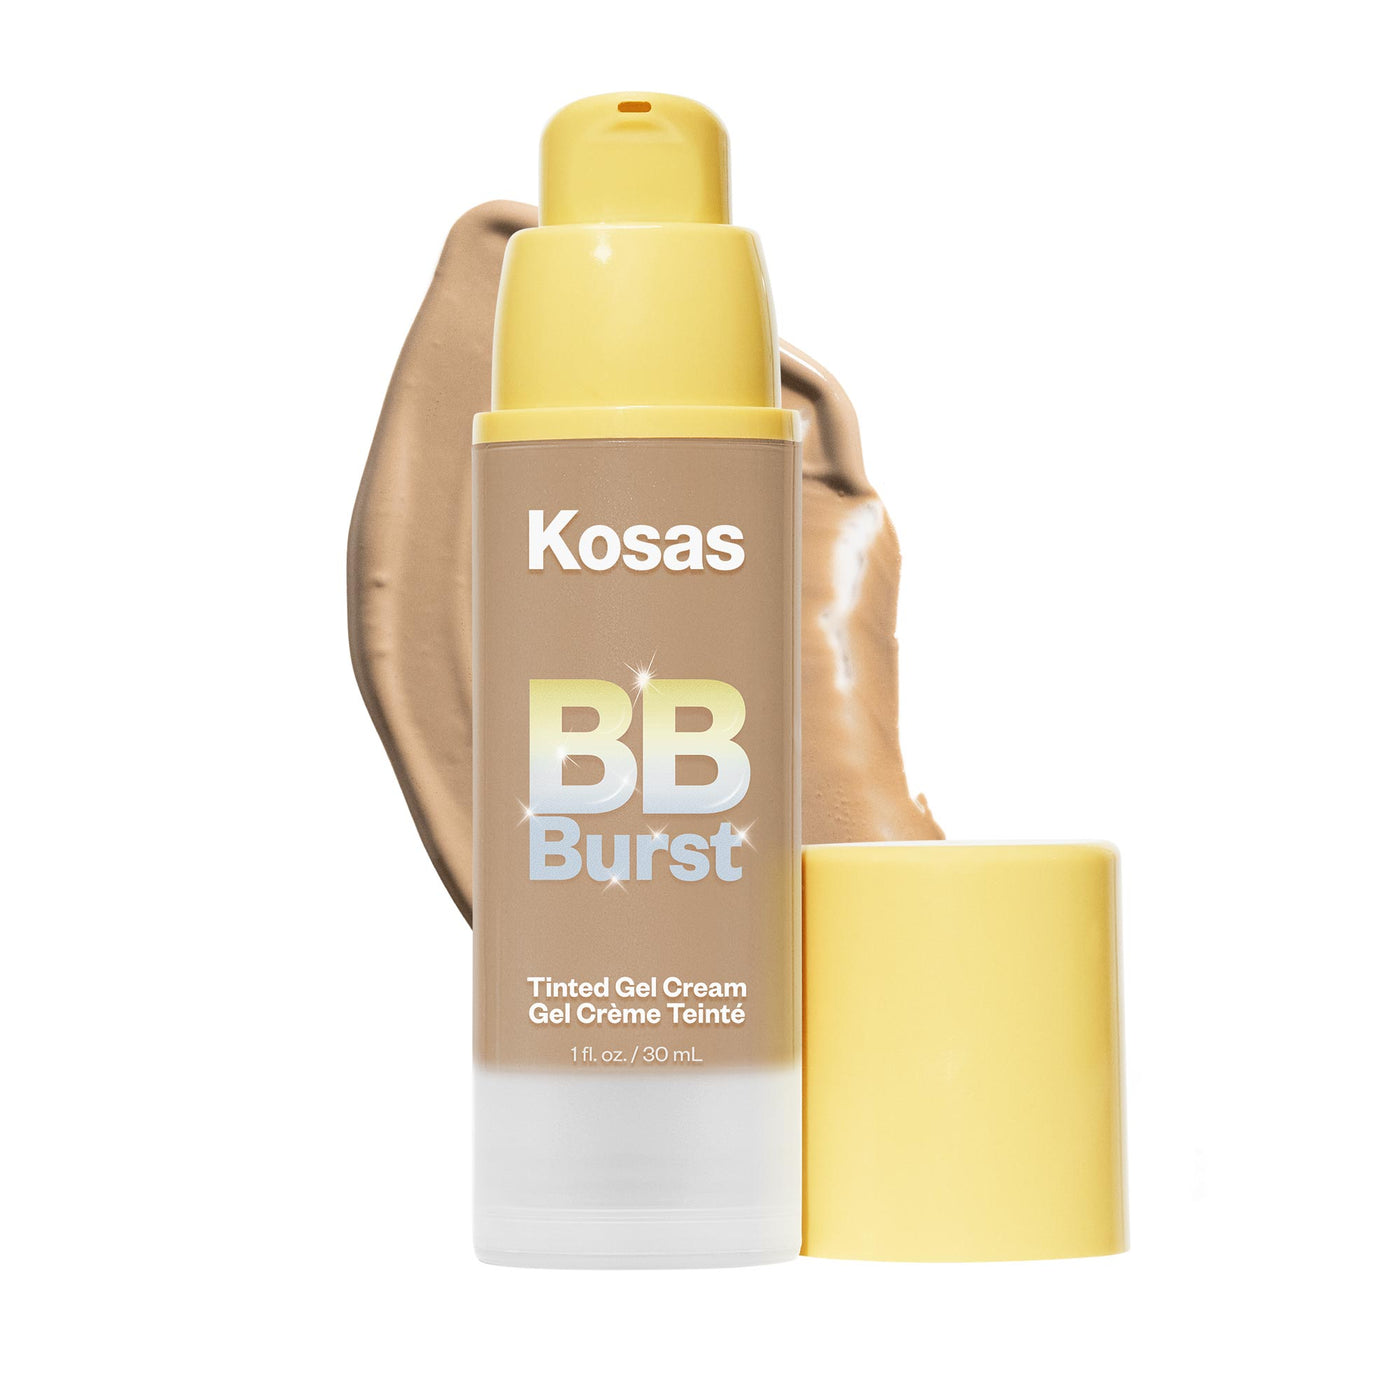 Kosas BB Burst Tinted Gel Cream 31